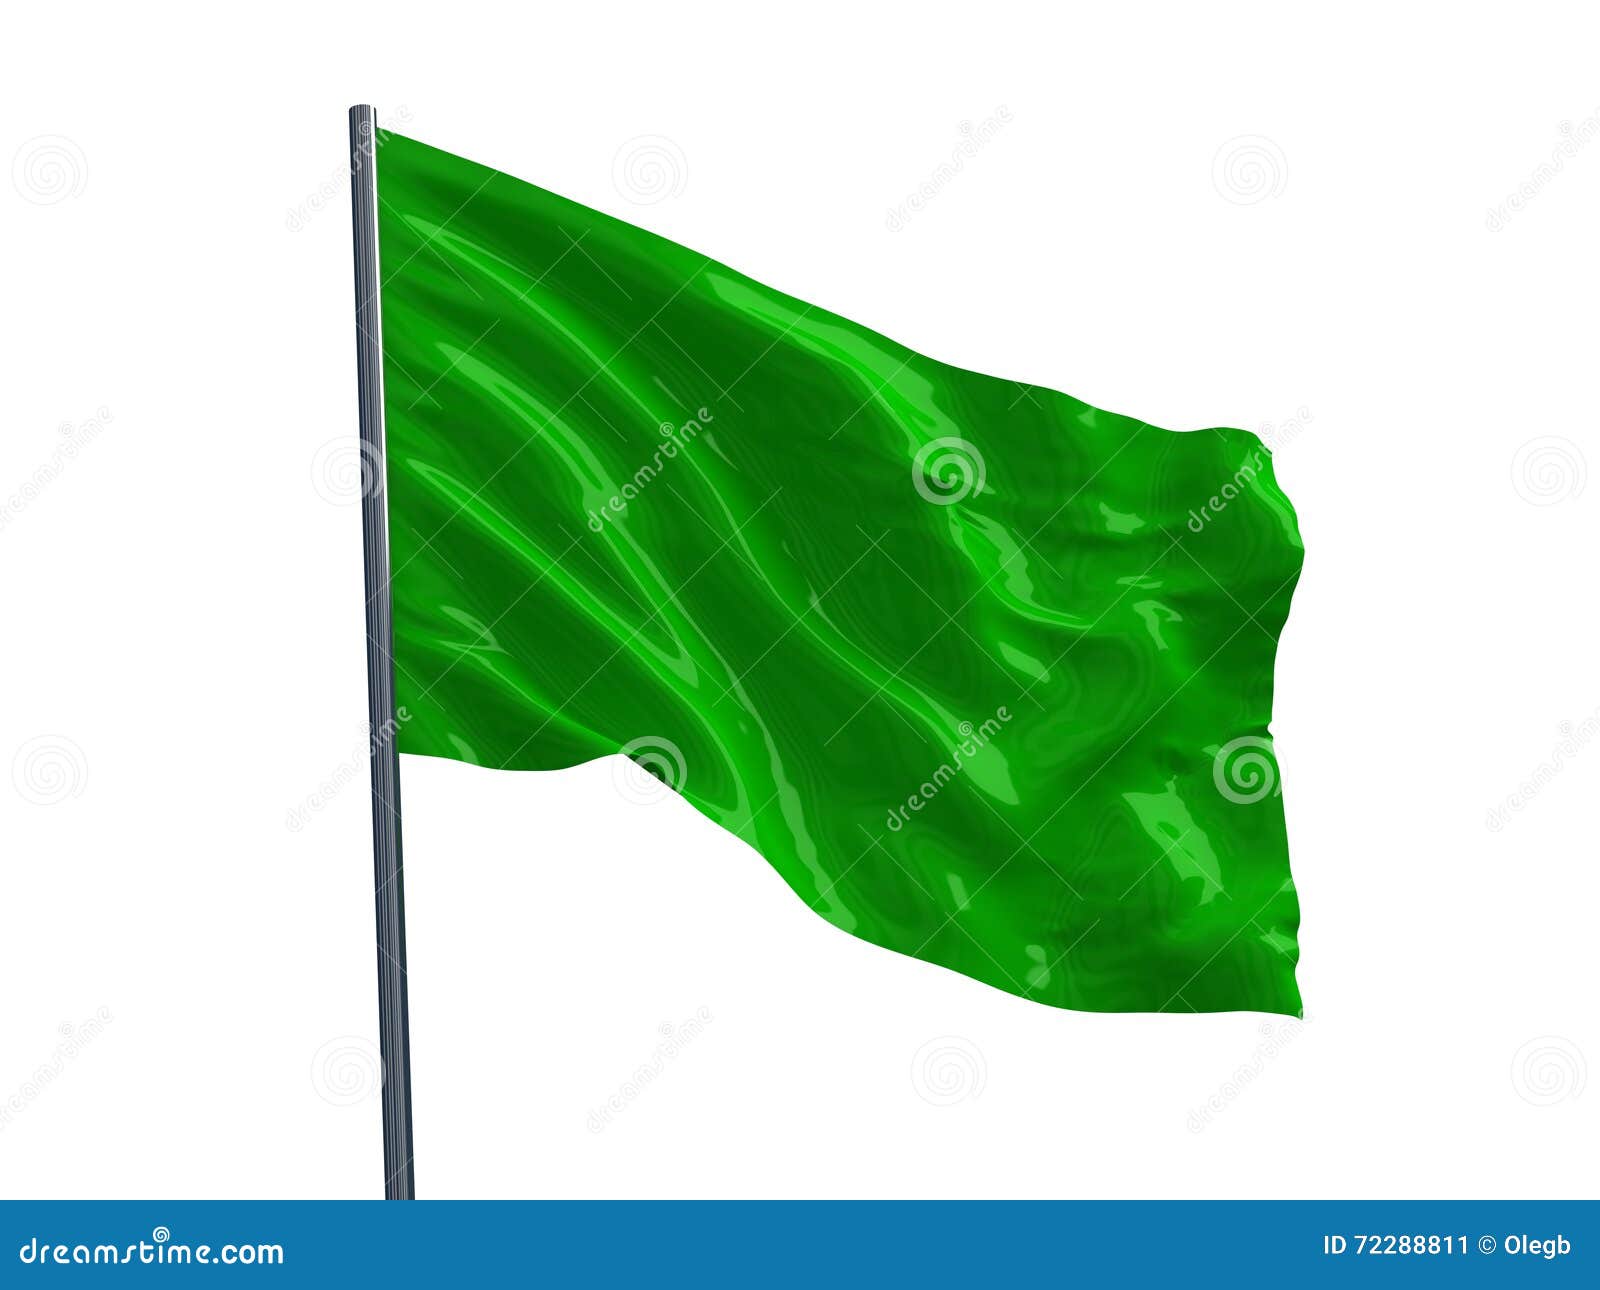 301366 Bandera verde claro playmobil,flag,white